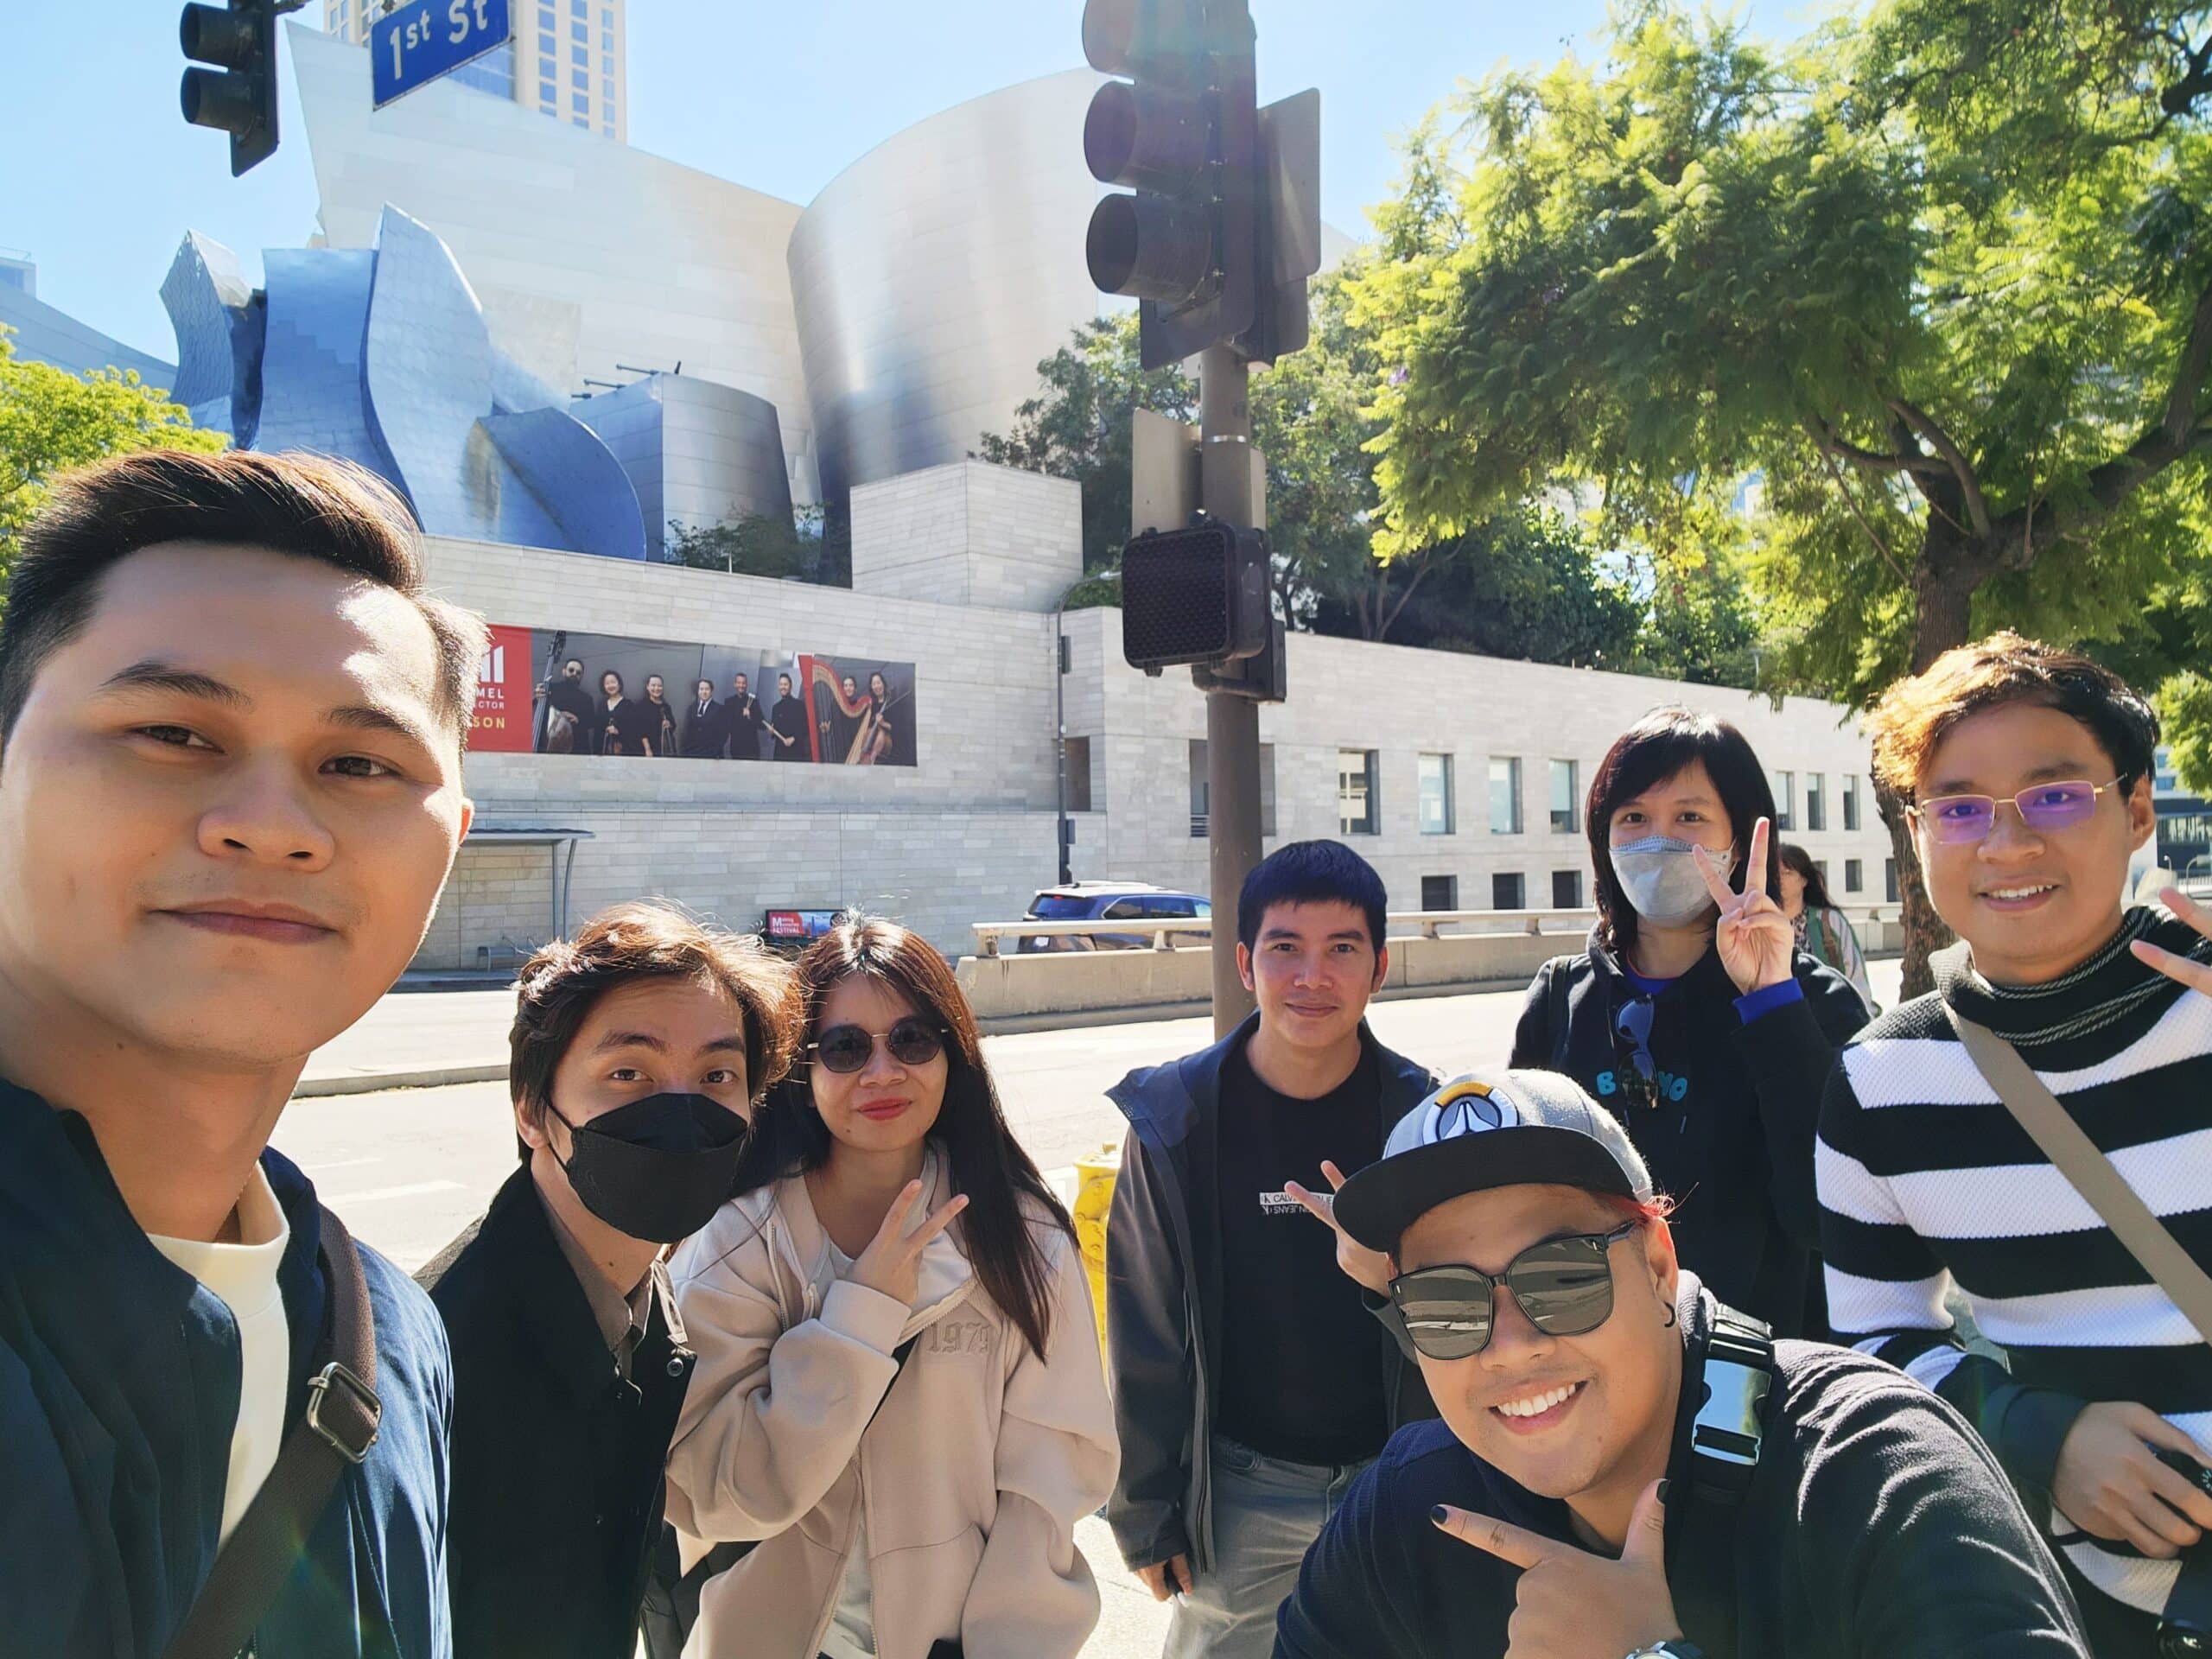 Tuan Tu (far right) with his Sparx* team on their Los Angeles tour